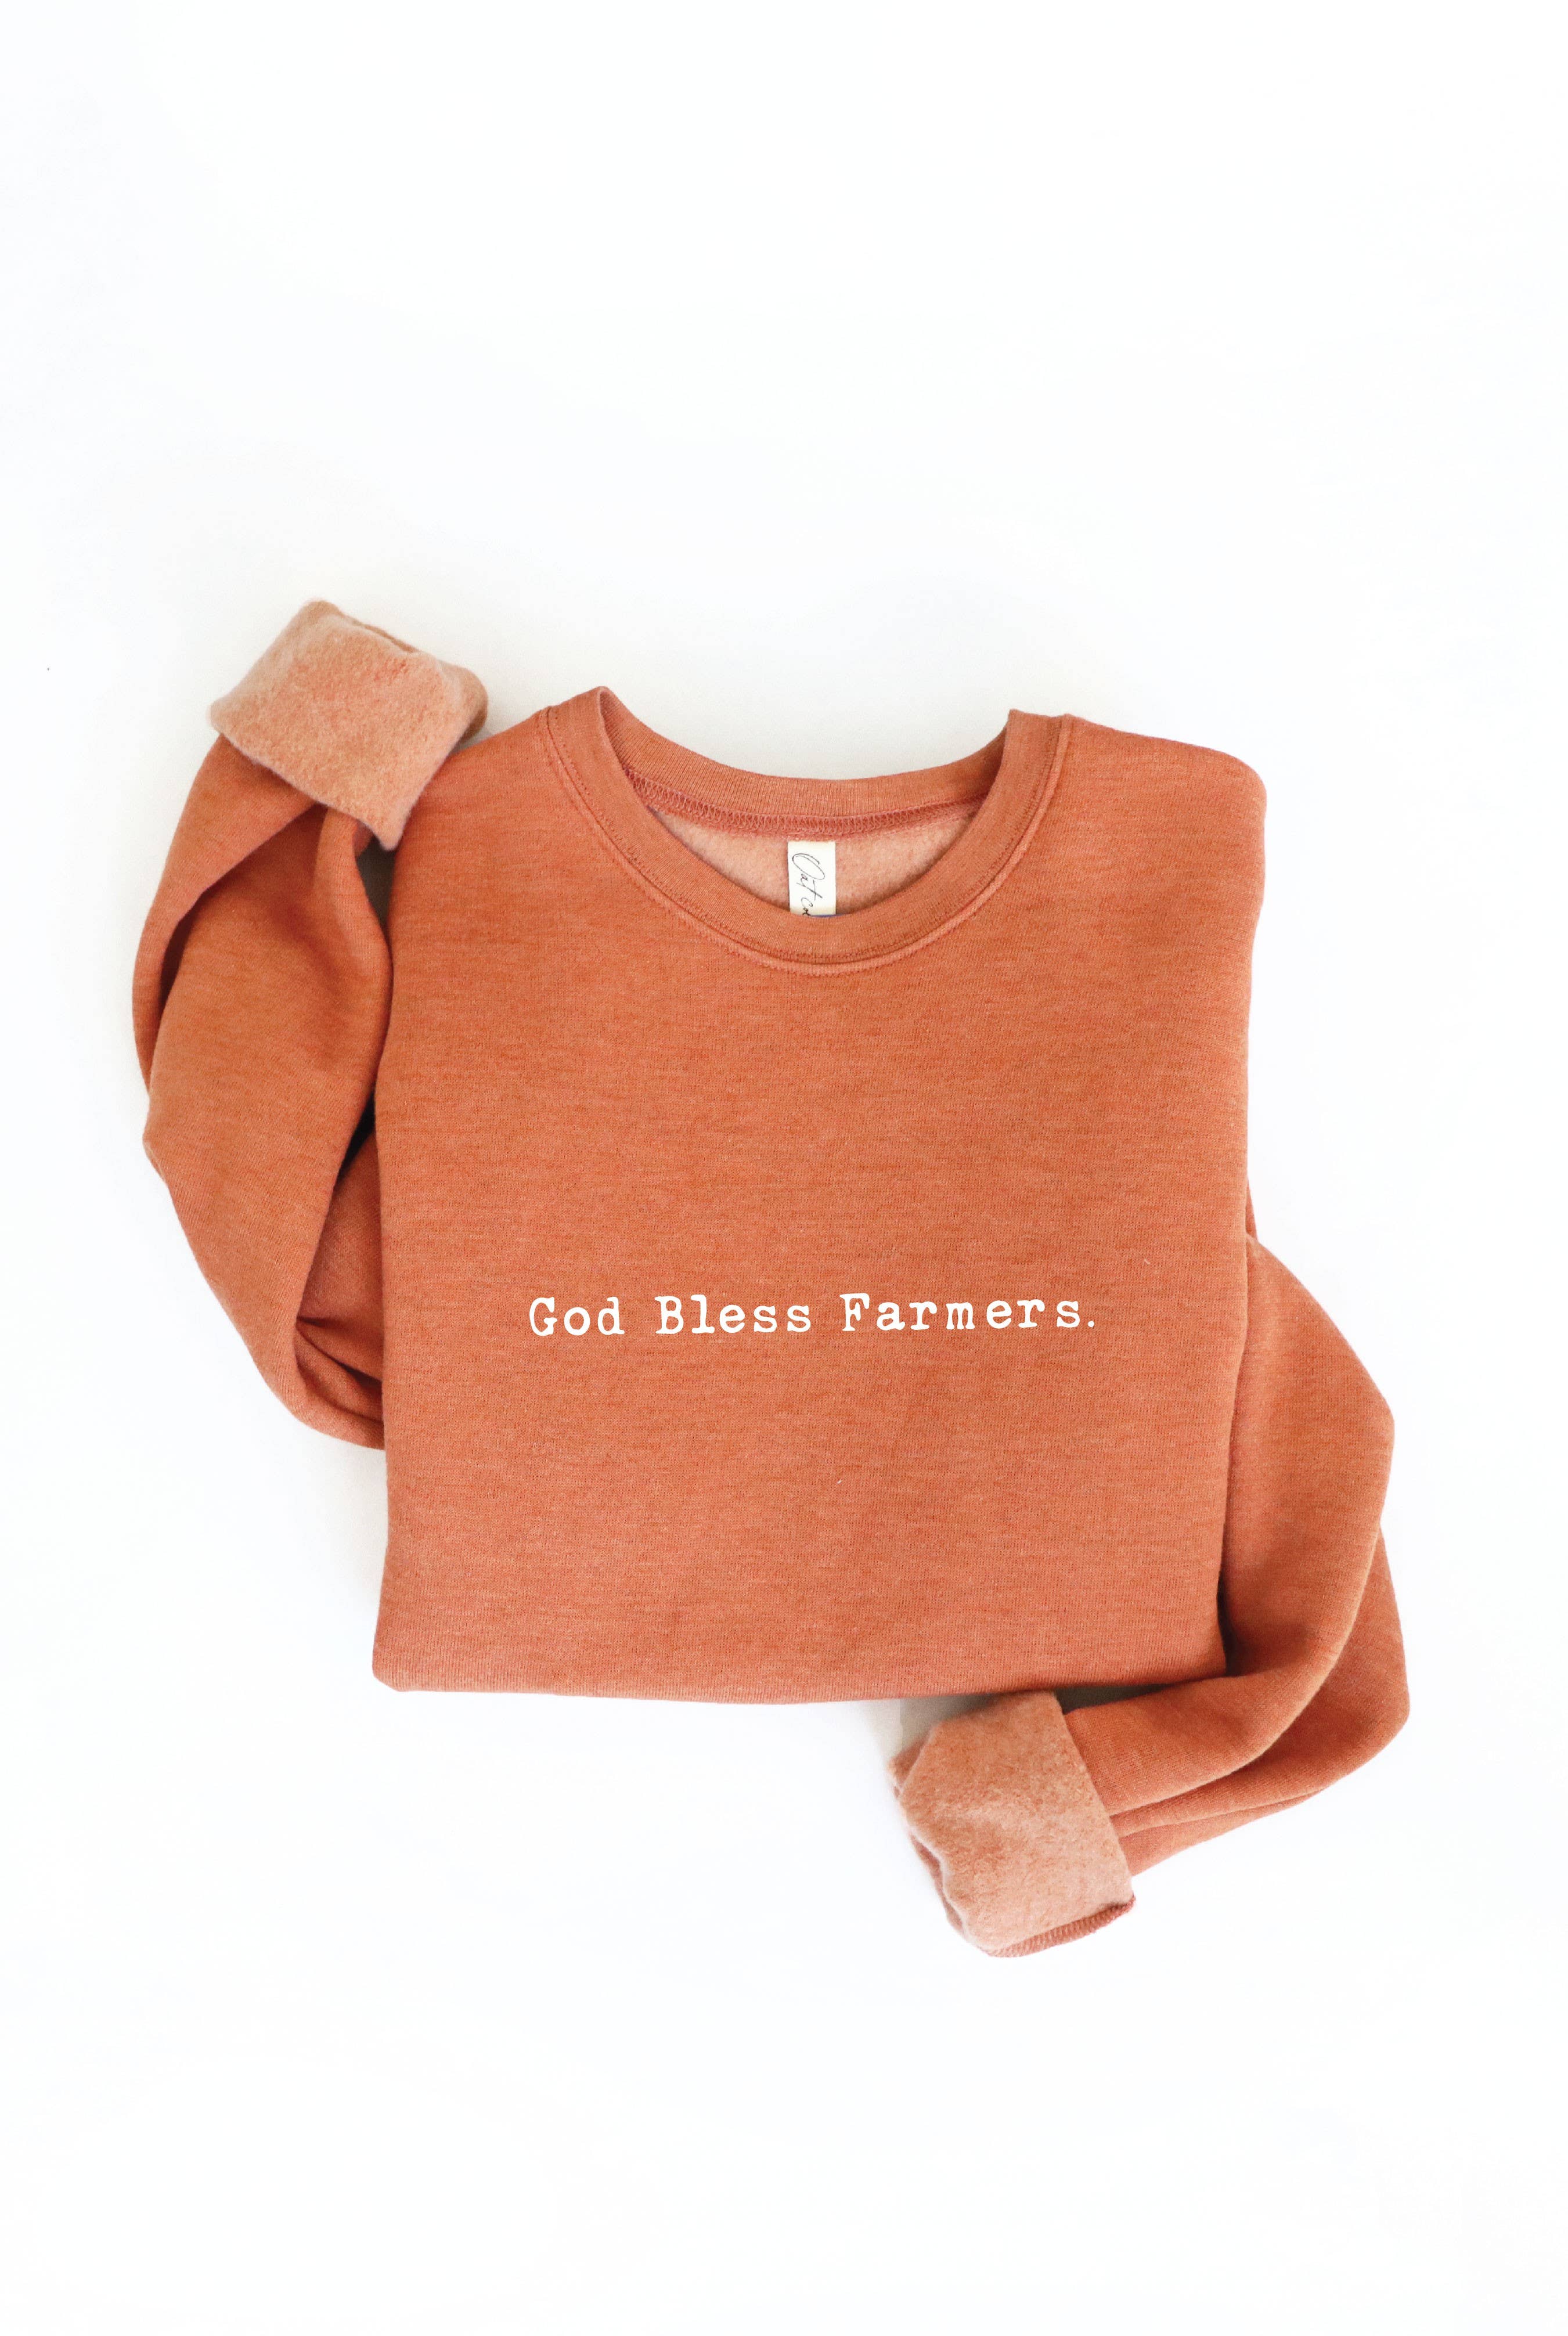 GOD BLESS FARMERS. Graphic Sweatshirt: XL / DARK H. SAGE